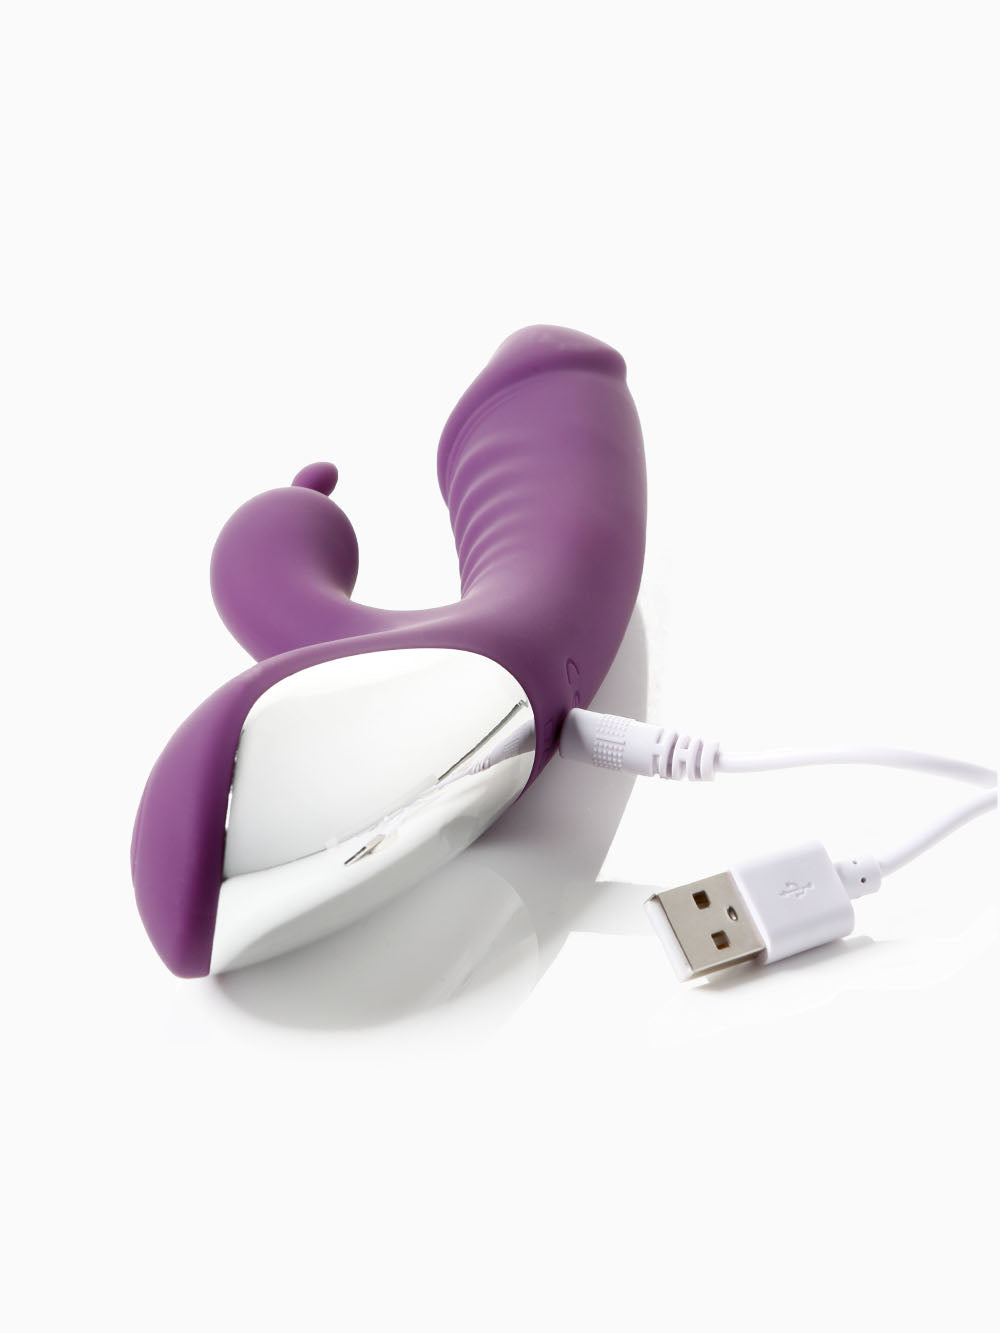 Pillow Talk Thumper Rabbit Vibrator Purple, 8.5 Inches